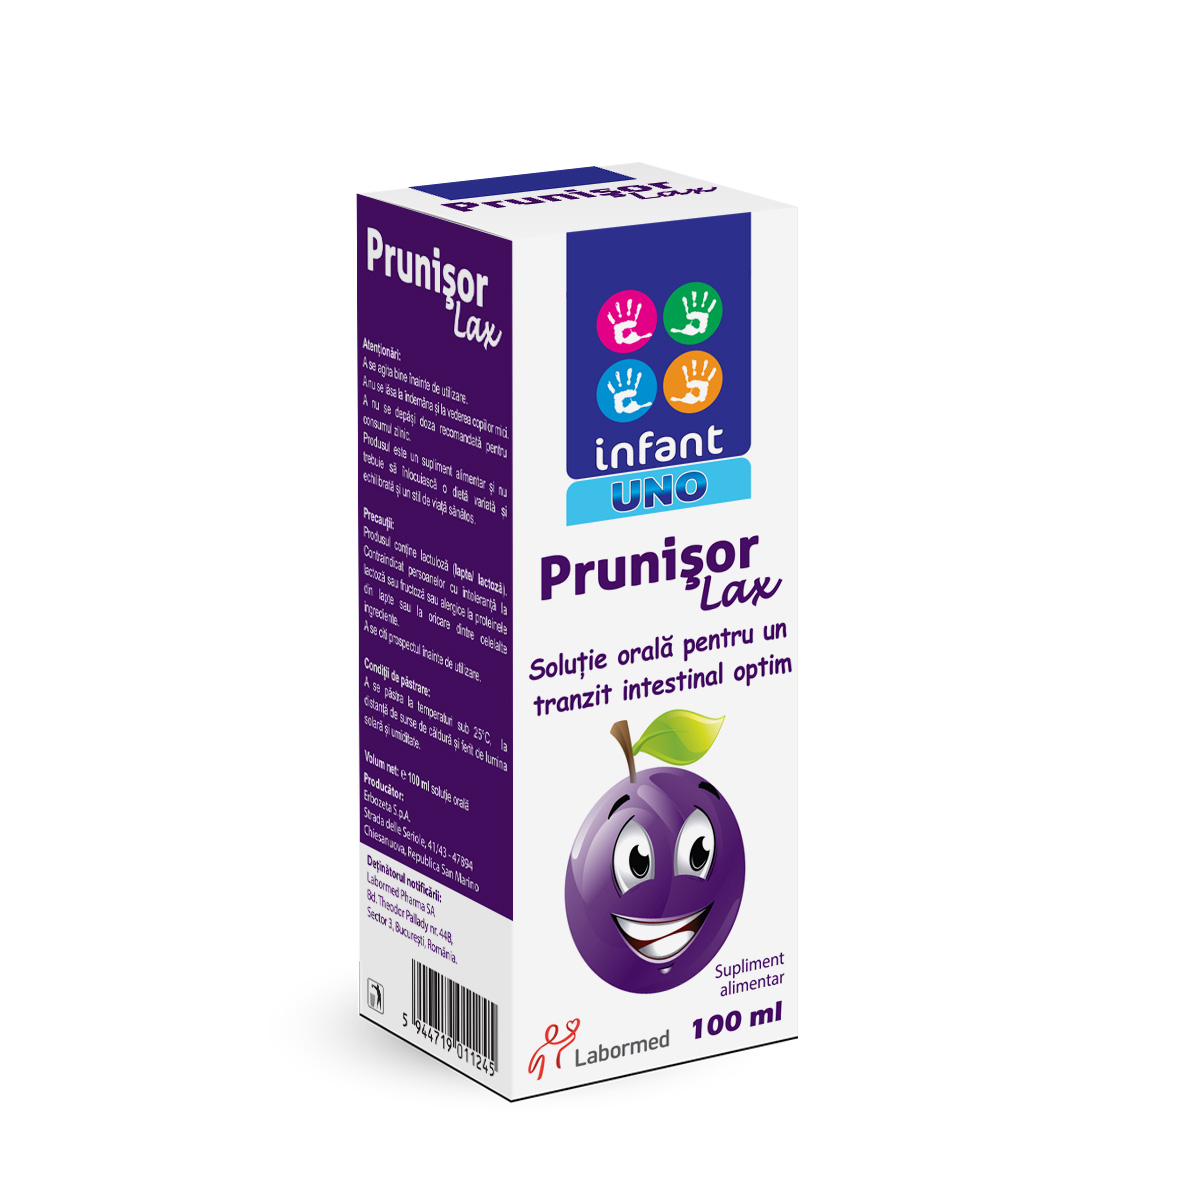 Prunisor Lax solutie orala pentru tranzitul intestinal Infant Uno, 100 ml, Labormed